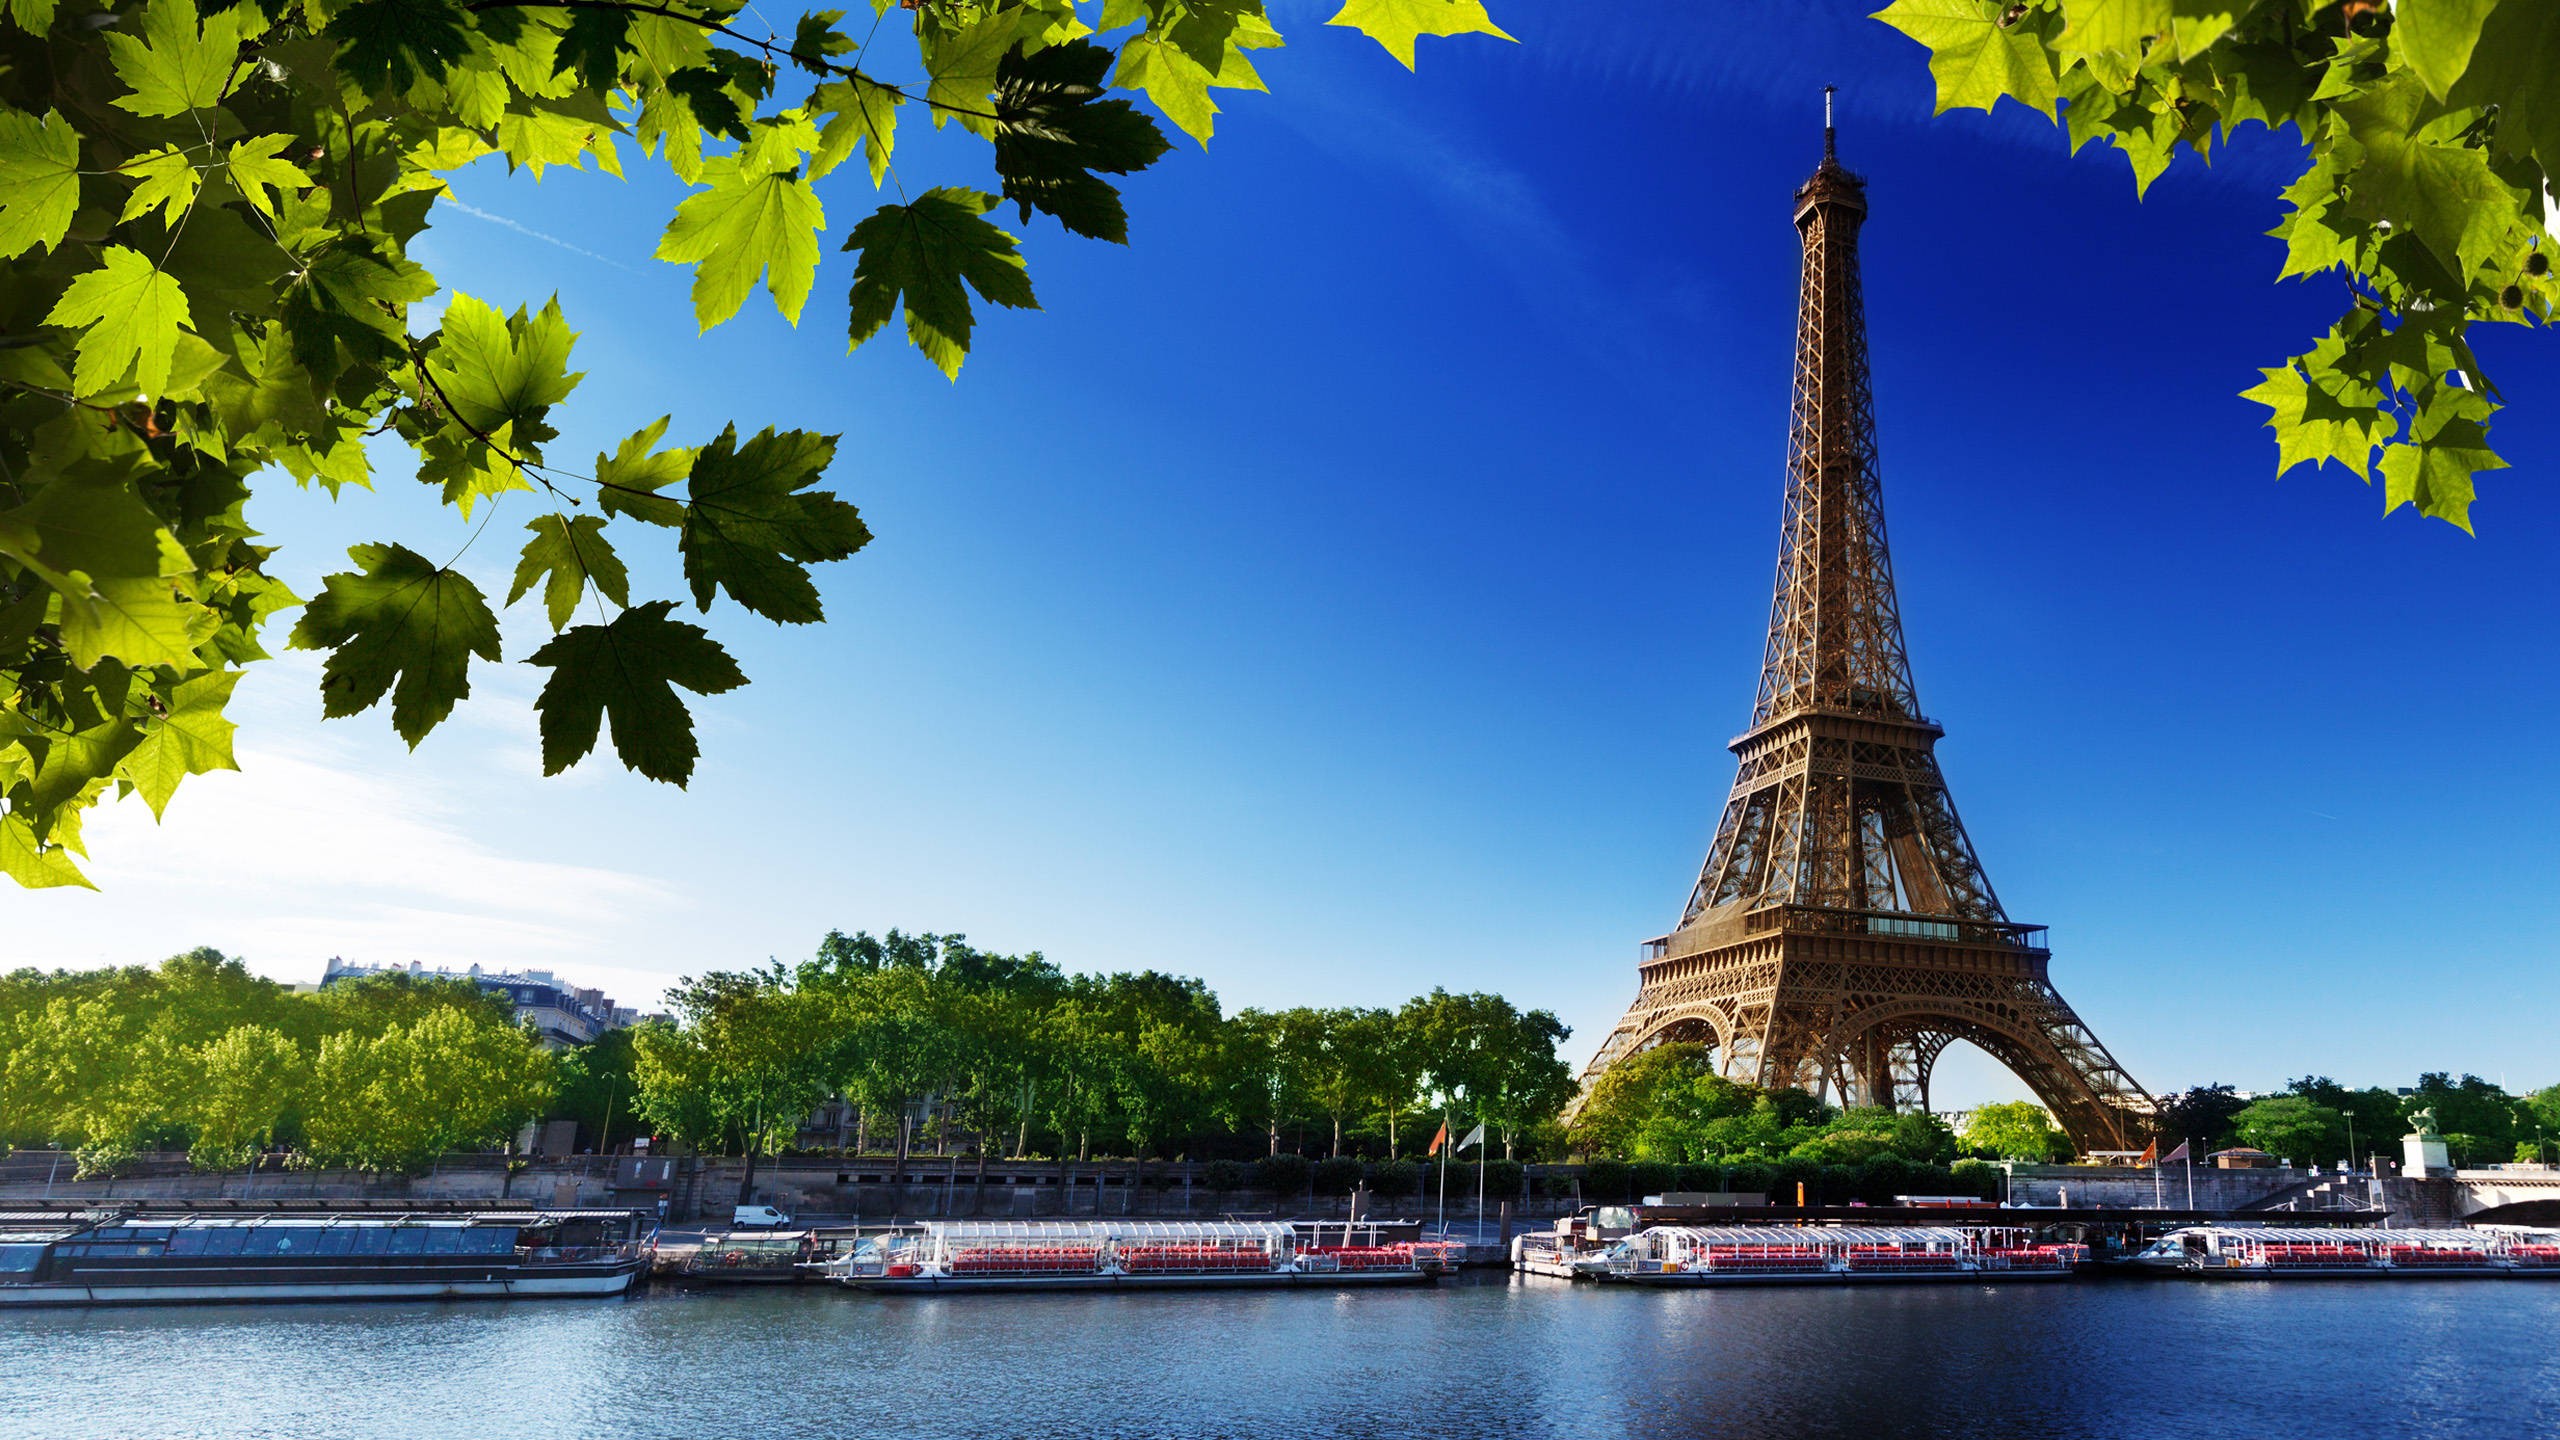 General 2560x1440 Eiffel Tower Paris France river landmark Europe